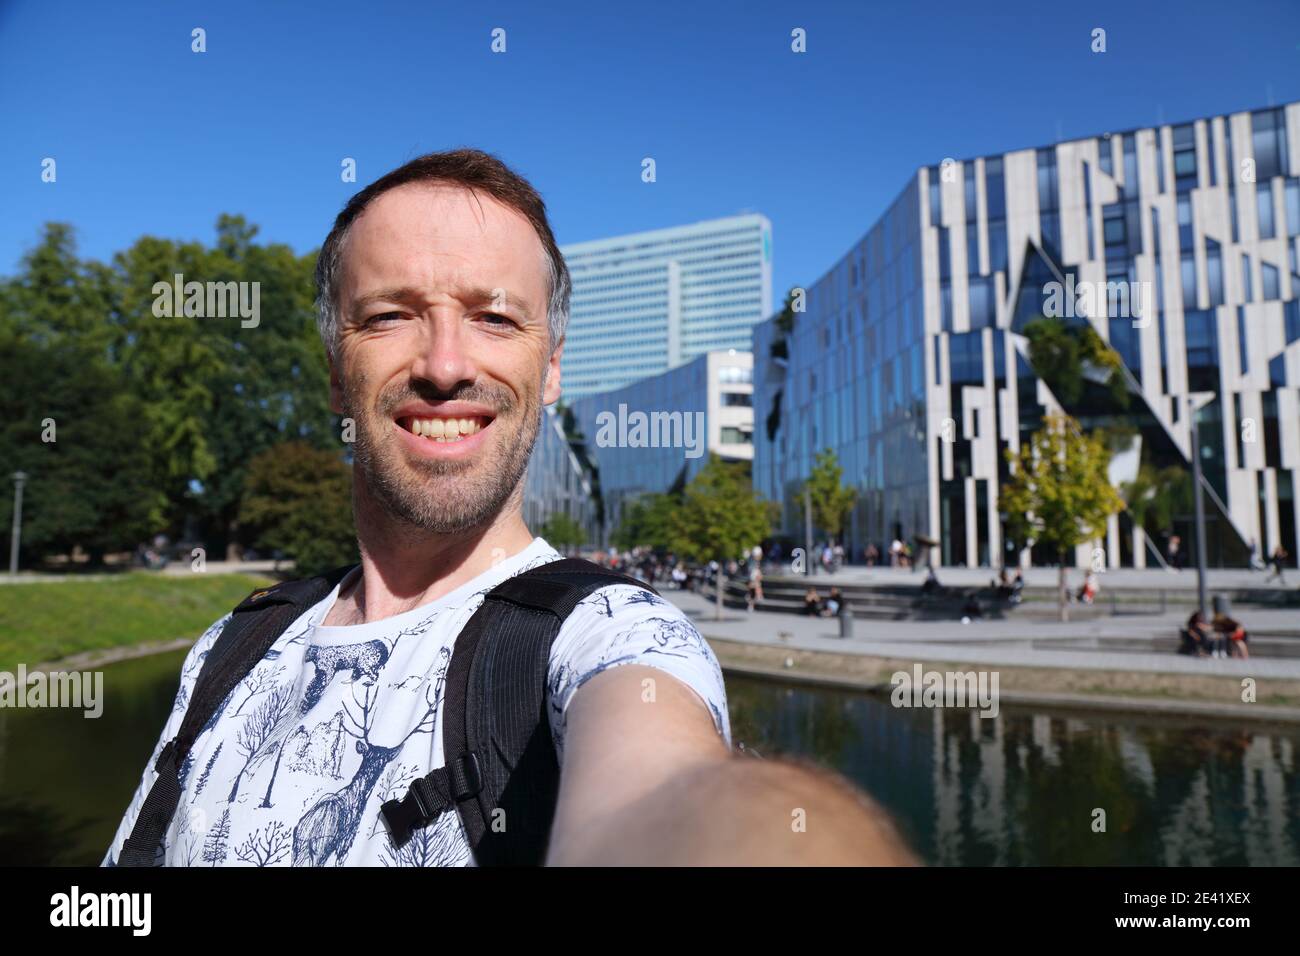 Selfie turistico a Dusseldorf, Germania. Selfie viaggiatore con architettura moderna di Dusseldorf. Foto Stock